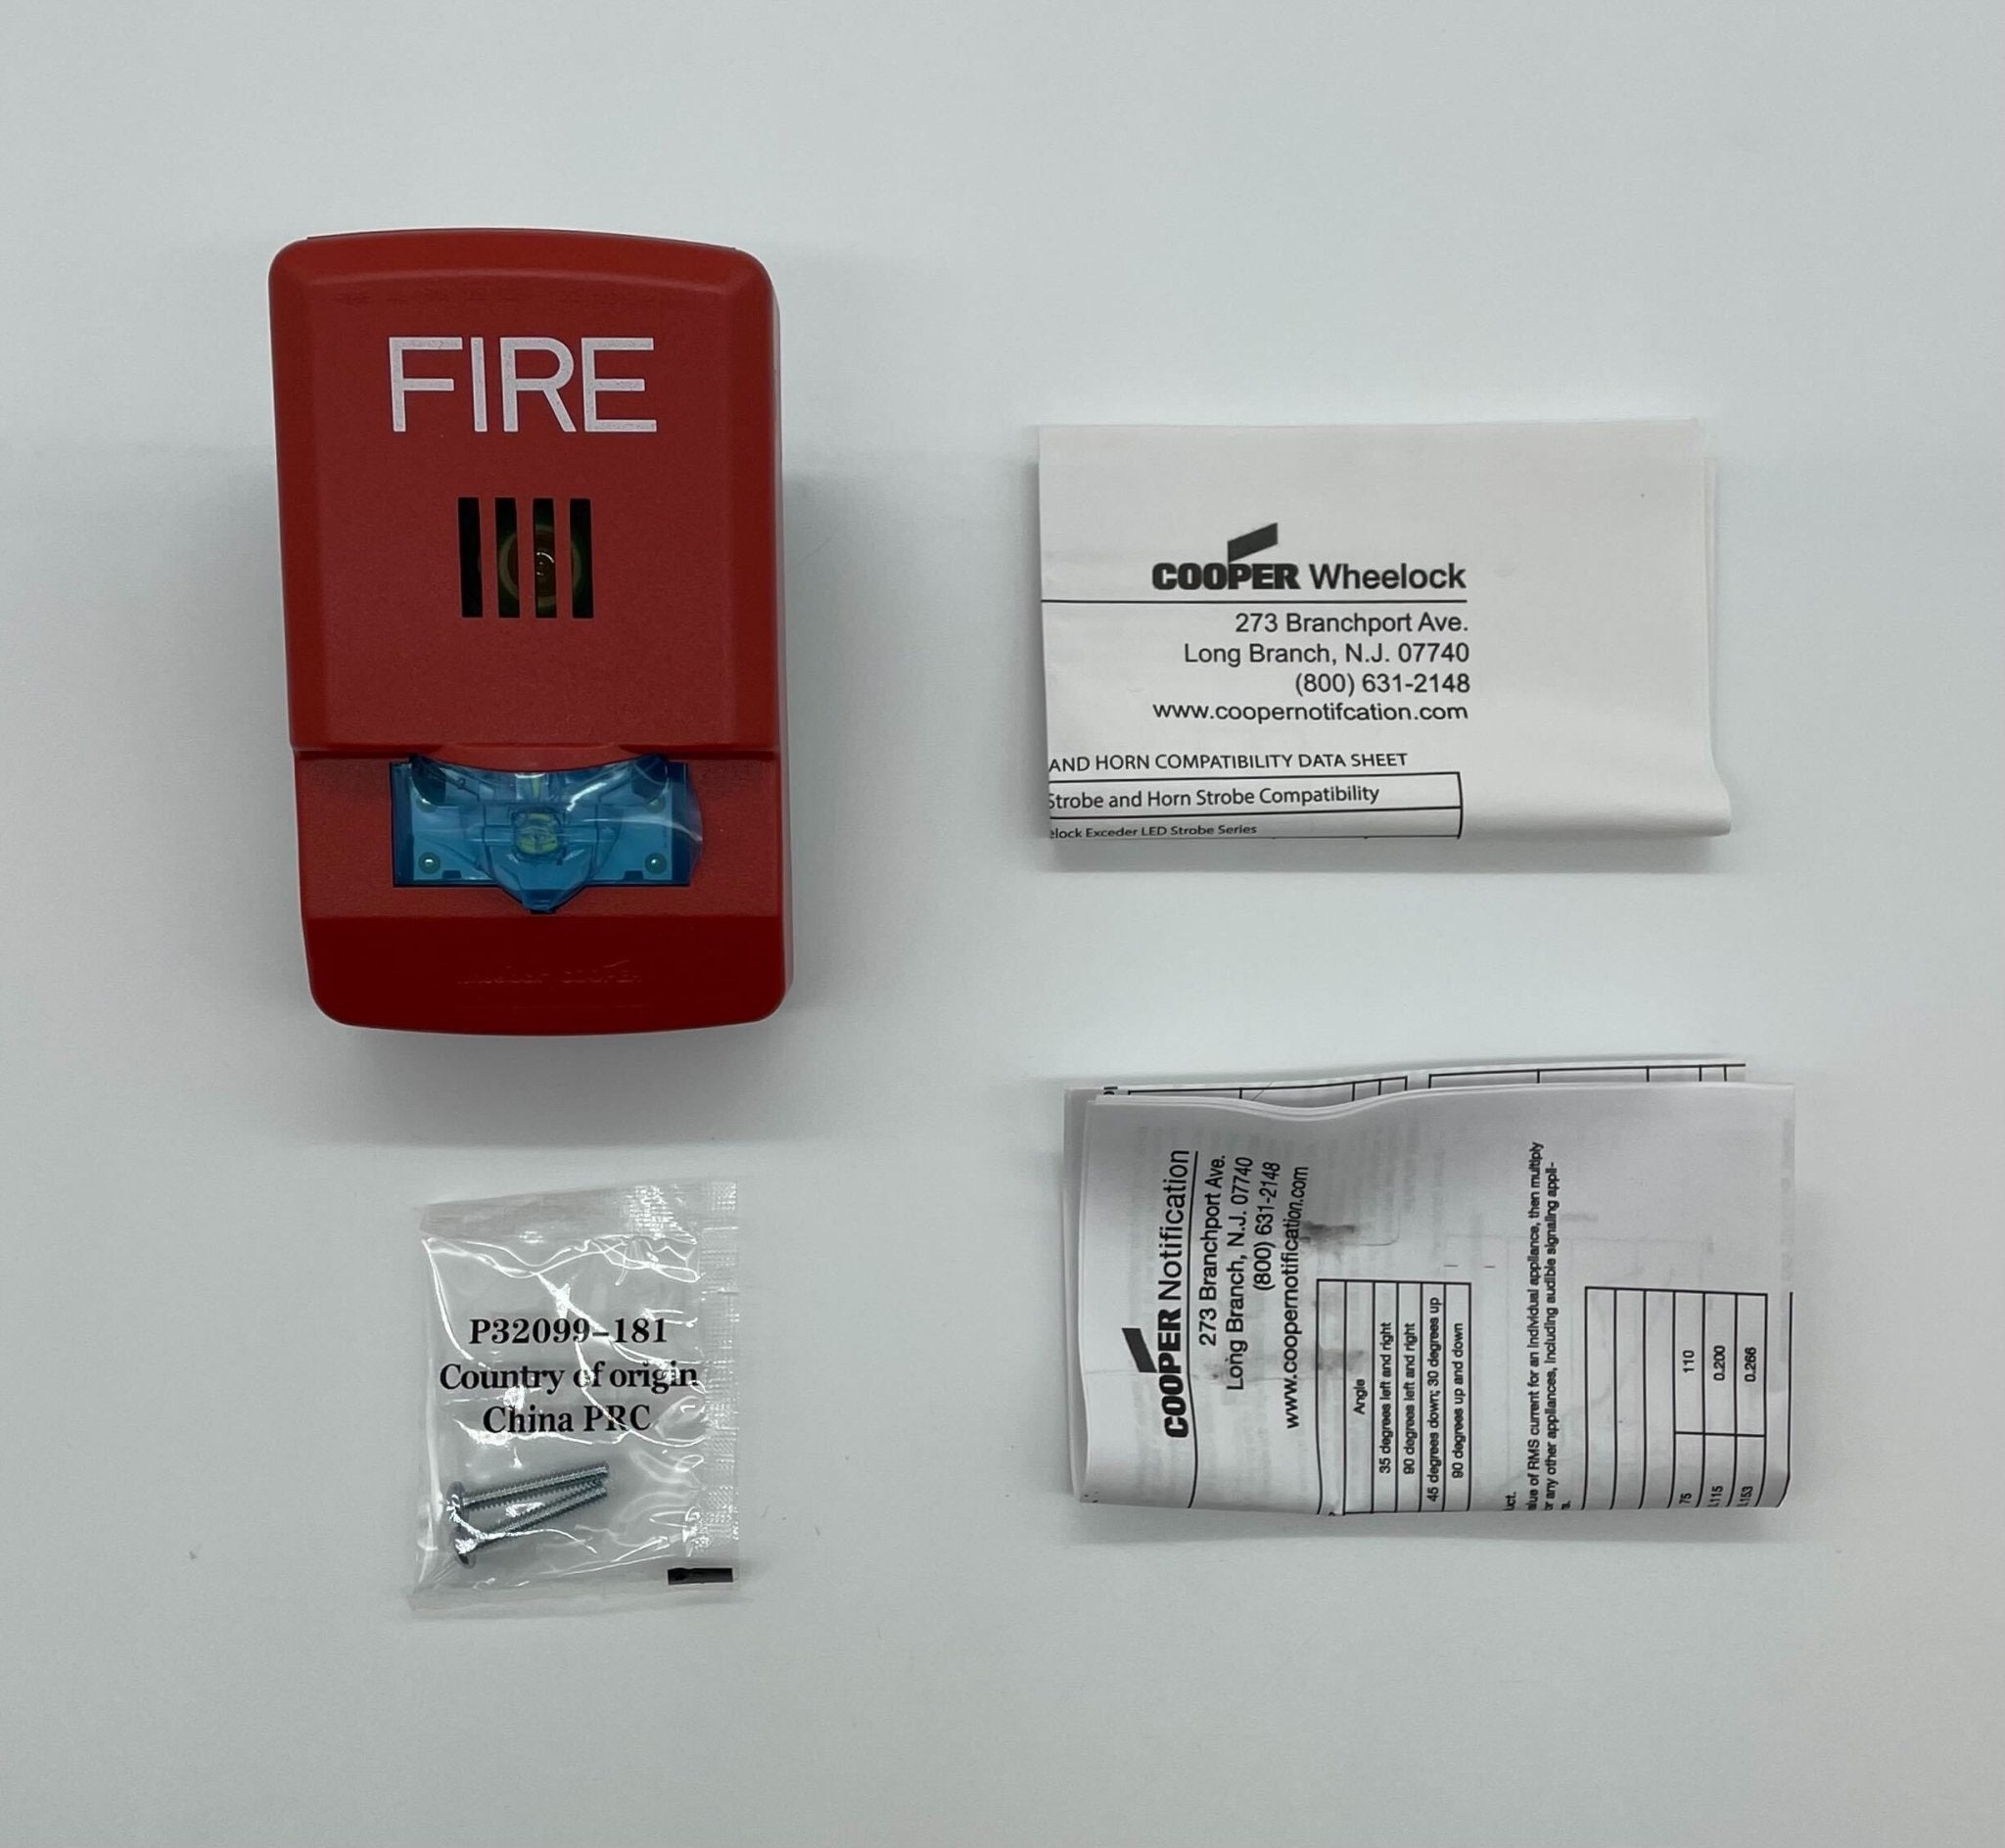 Wheelock LHSR - The Fire Alarm Supplier